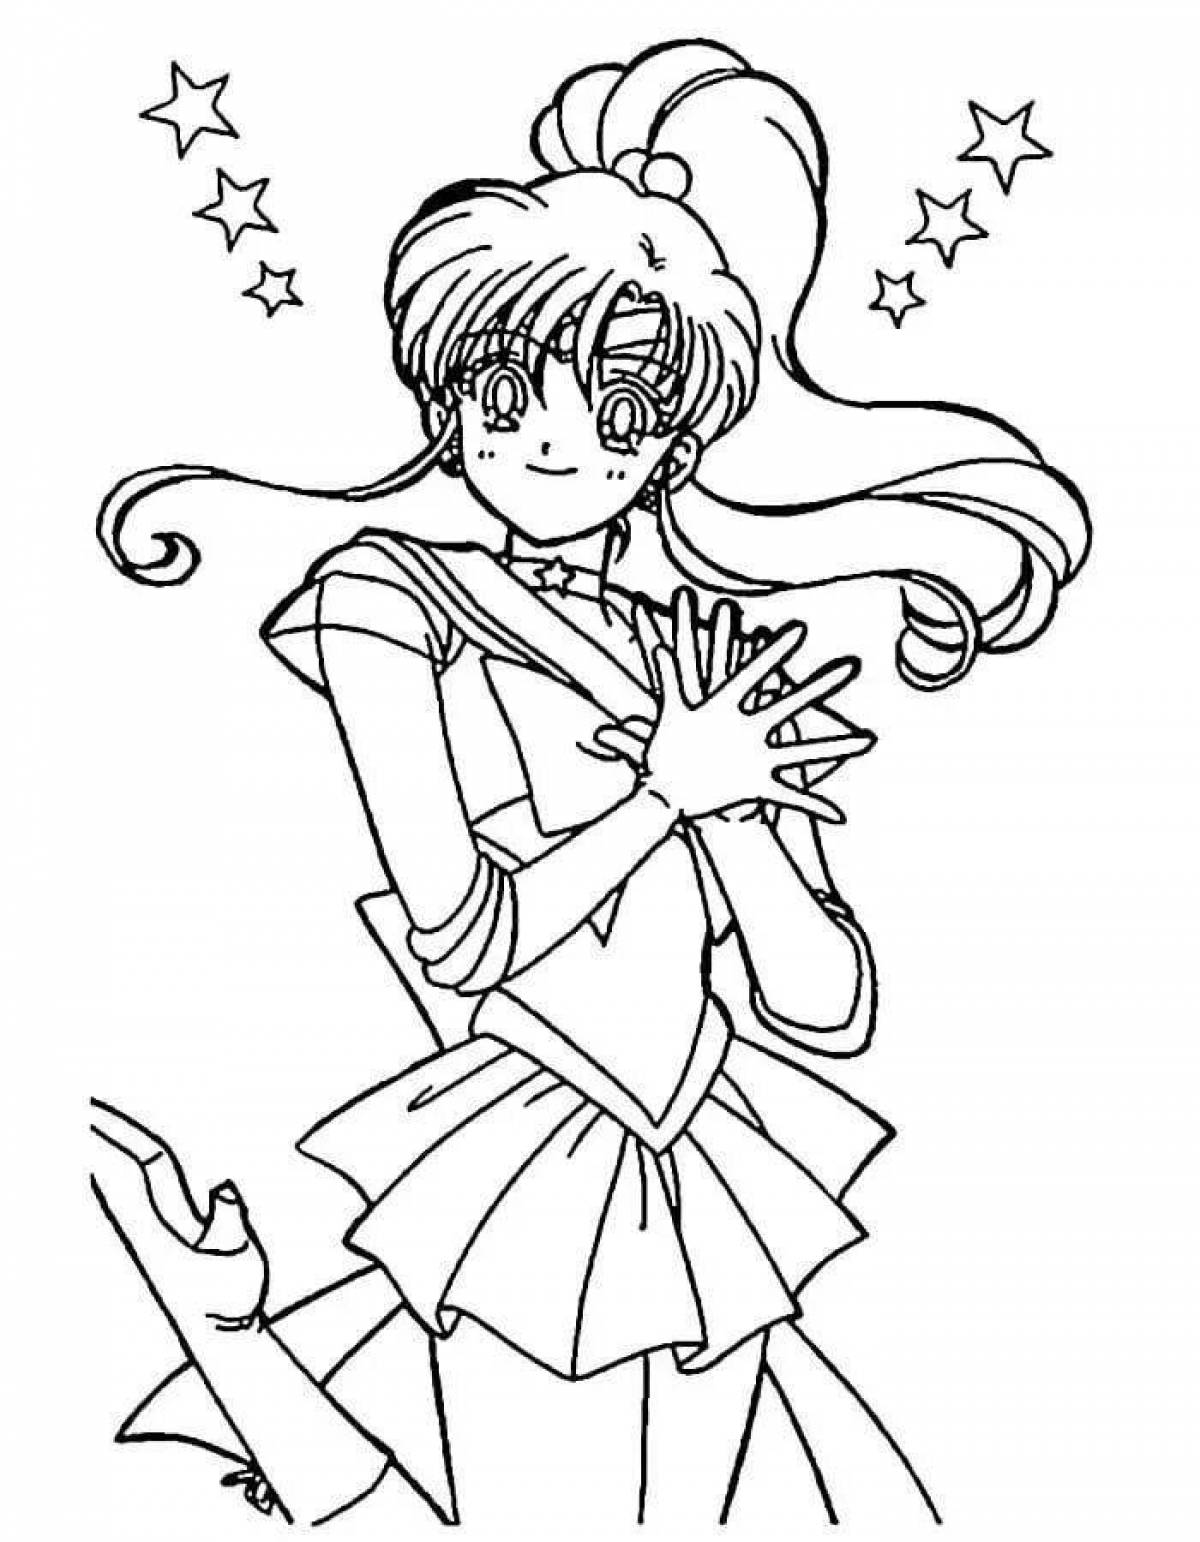 Sailor moon coloring book